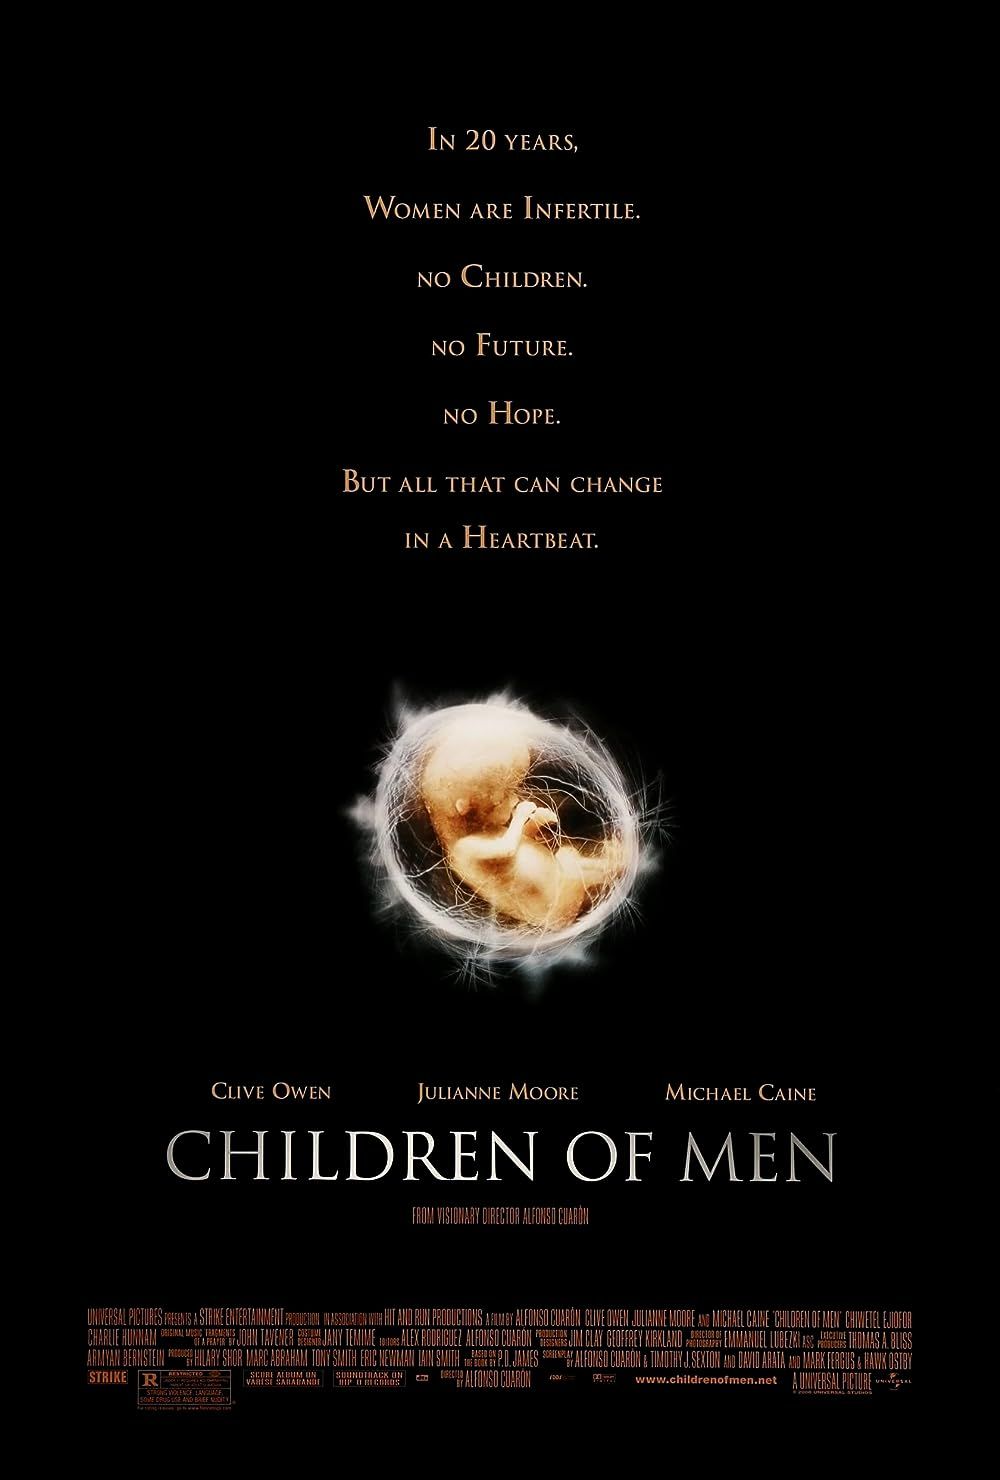 A Fetus on Children of Men Poster